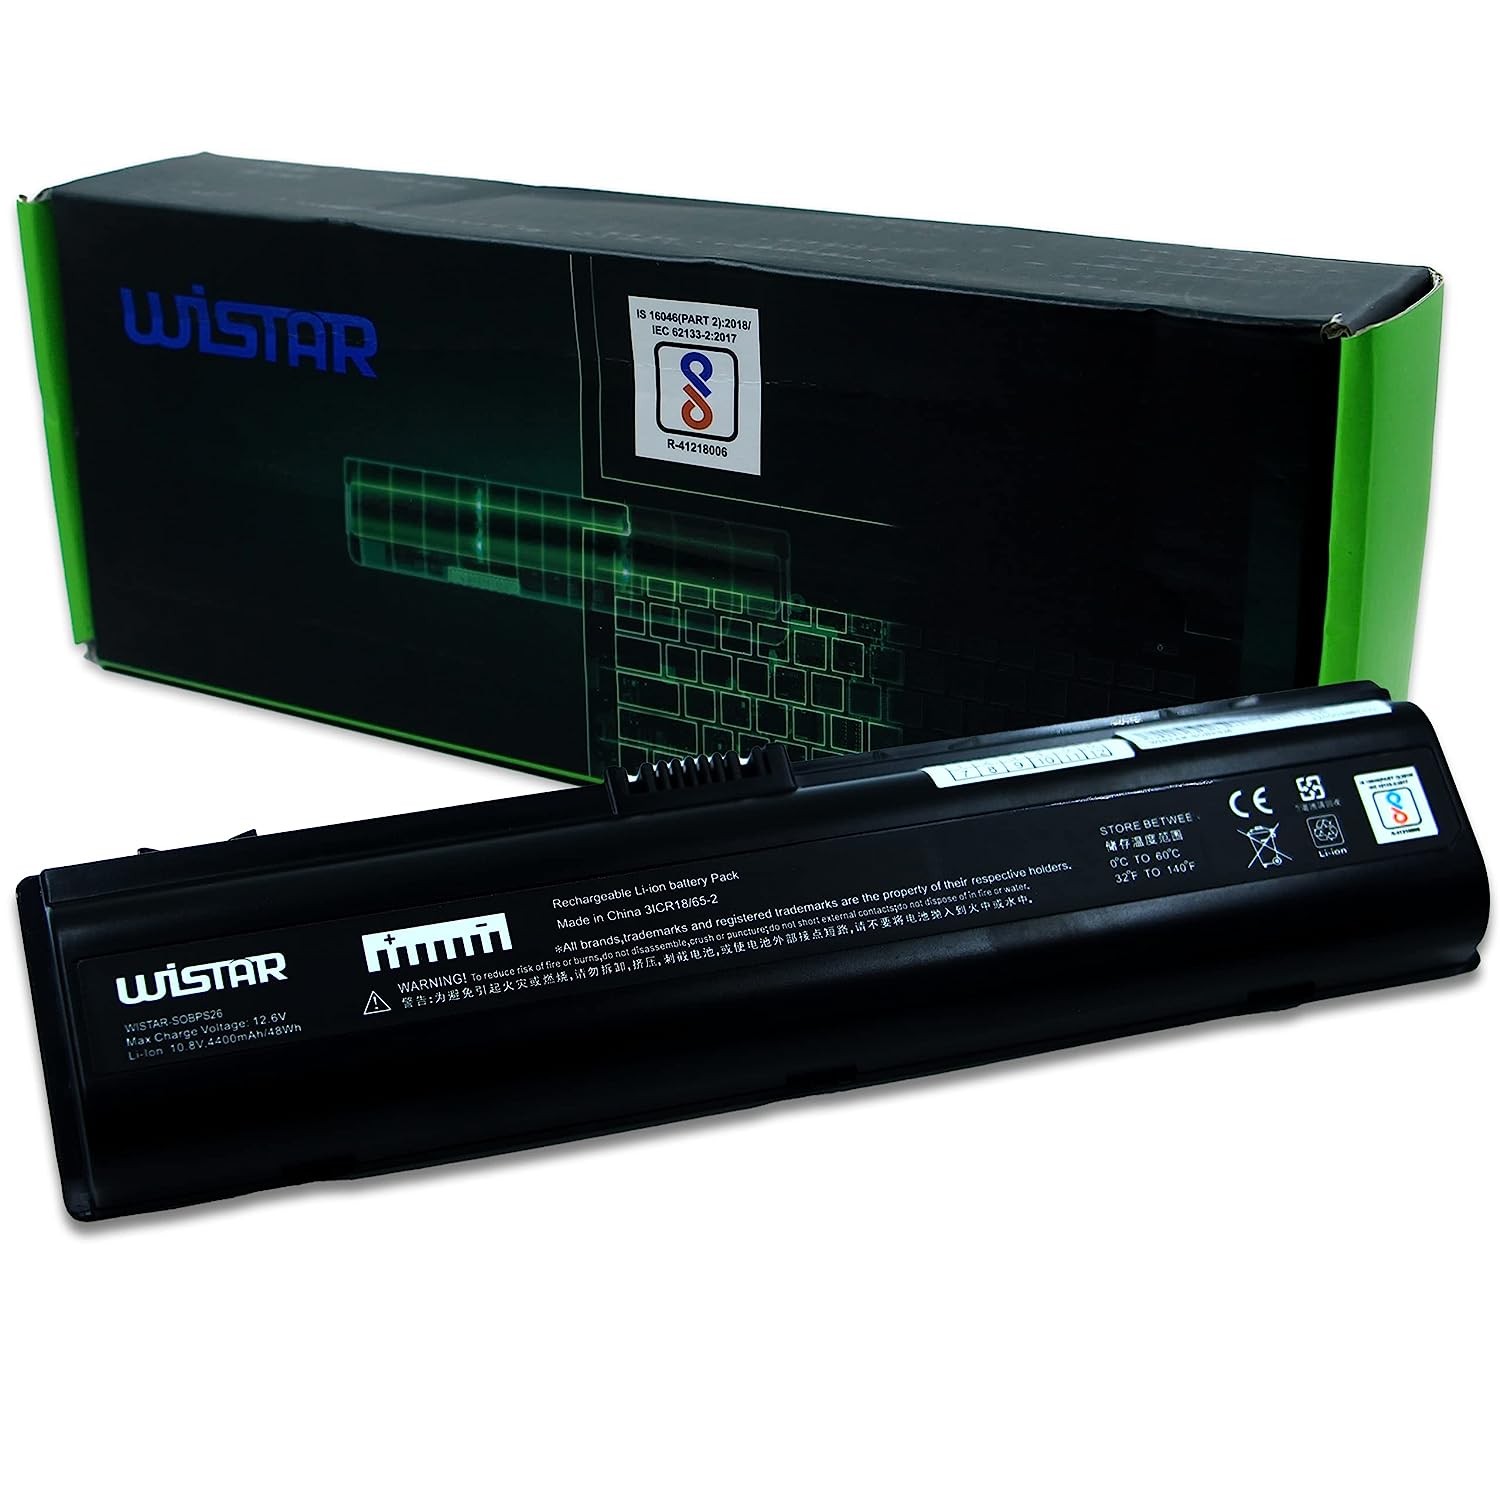 WISTAR Laptop Battery for HP Pavilion DV6000 DV2000 DV6700 DV2500 DV6500 DV2700 G6000; Compaq Presario C700 V6000 A900 F500; Replace HSTNN-LB42 HSTNN-DB42 446506-001 462853-001 441425-001 417066-001